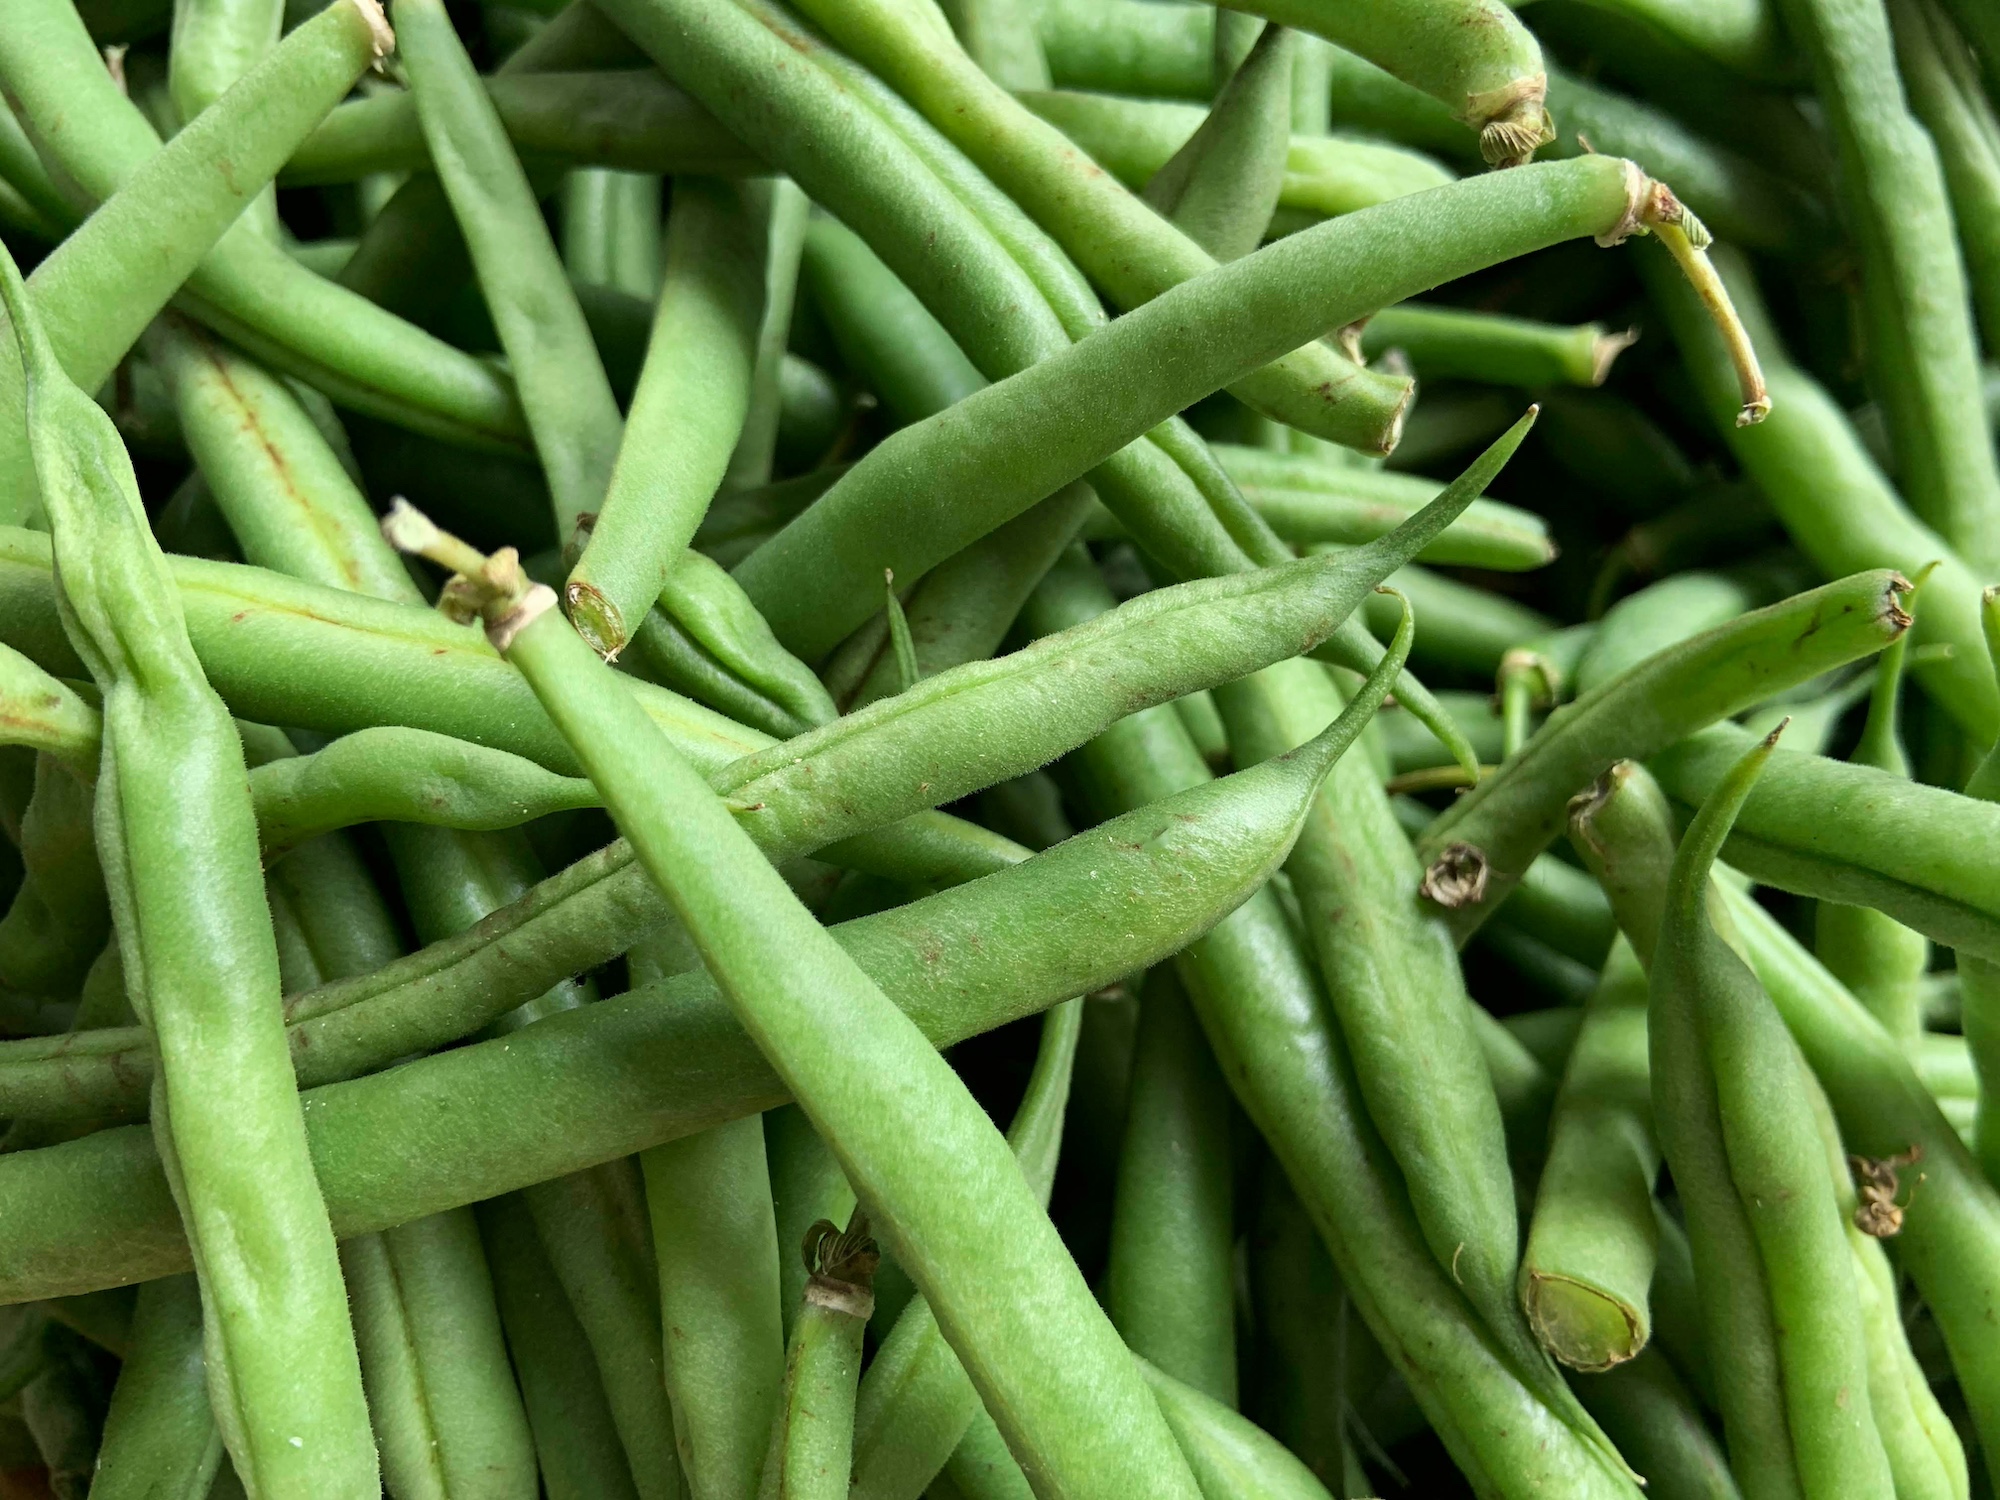 Dwarf Beans (Phaseolus vulgaris)